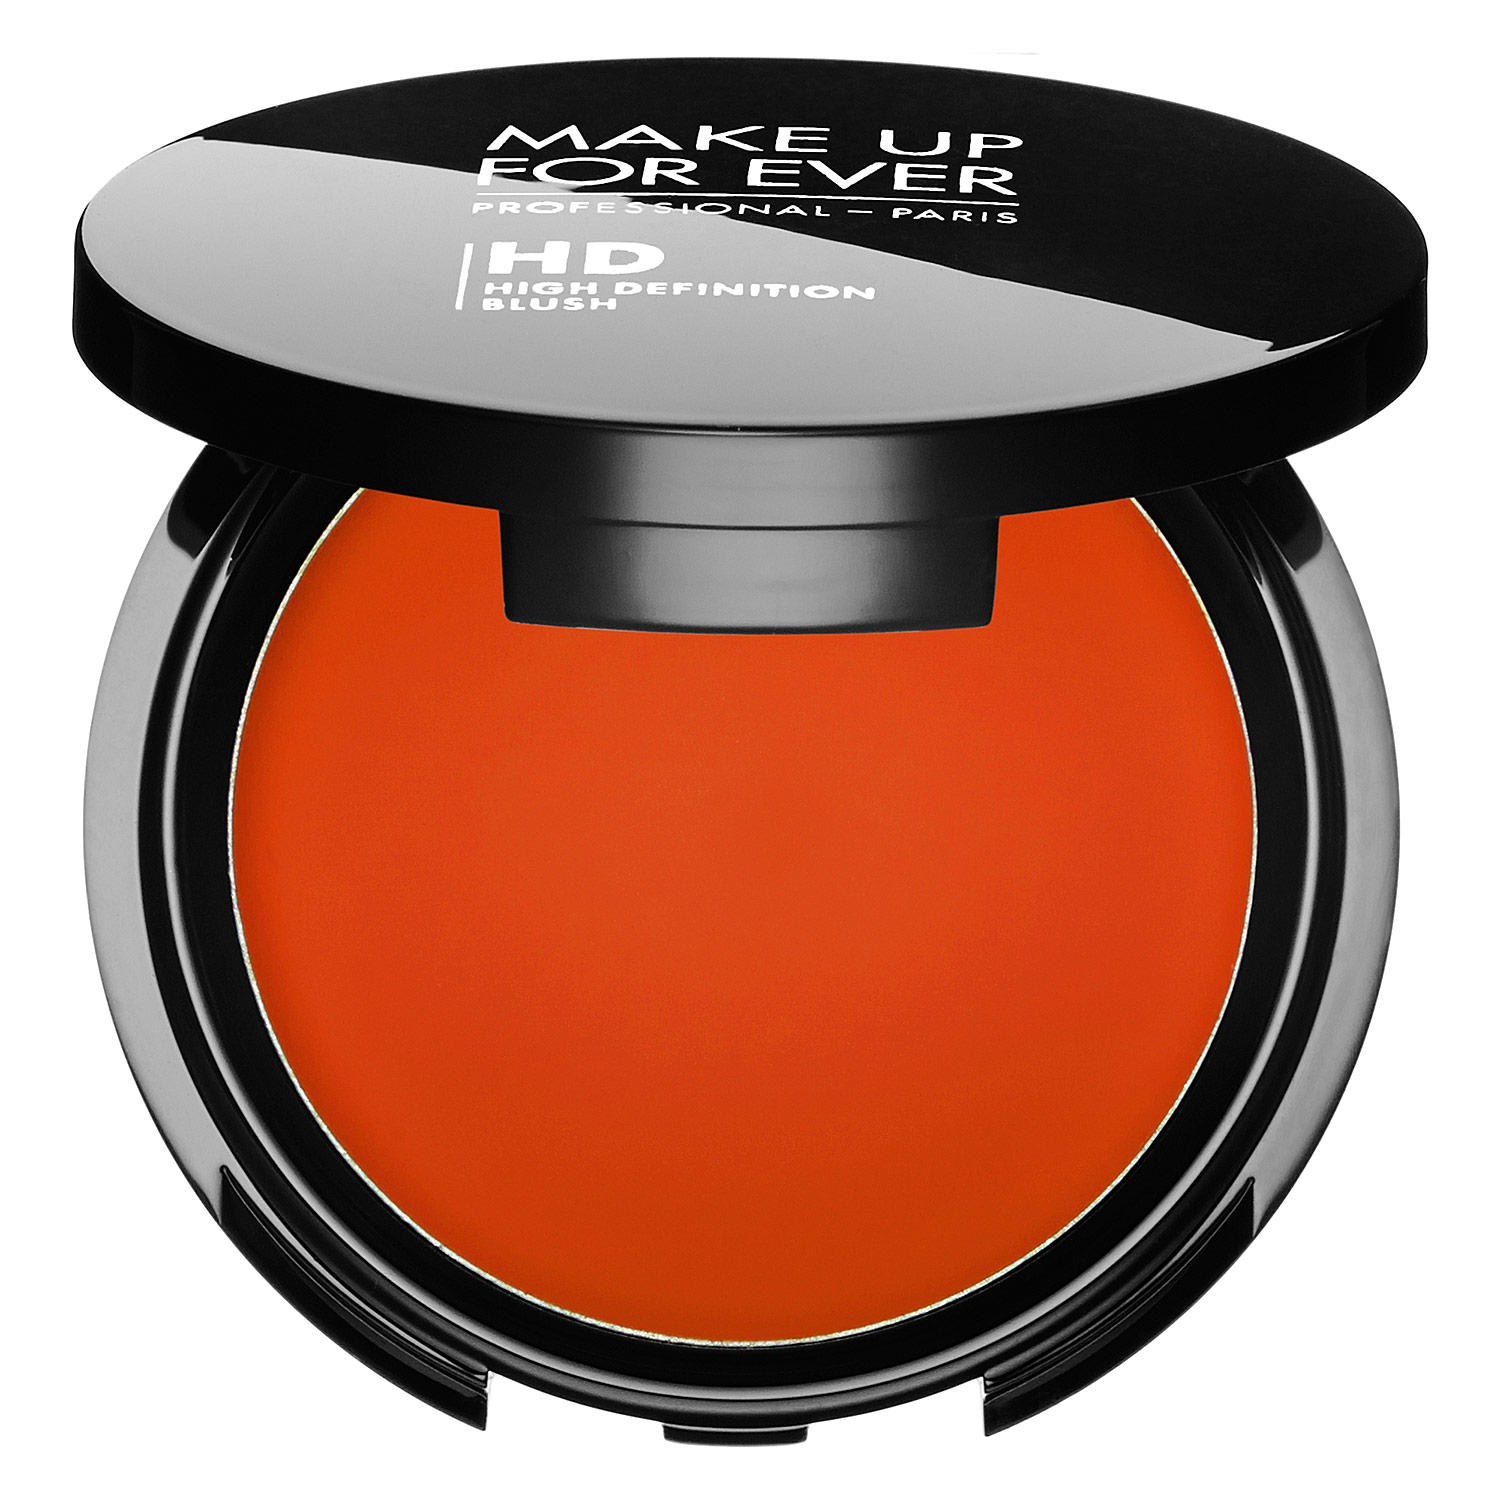 Makeup Forever HD Second Skin Cream Blush Tangerine 515 